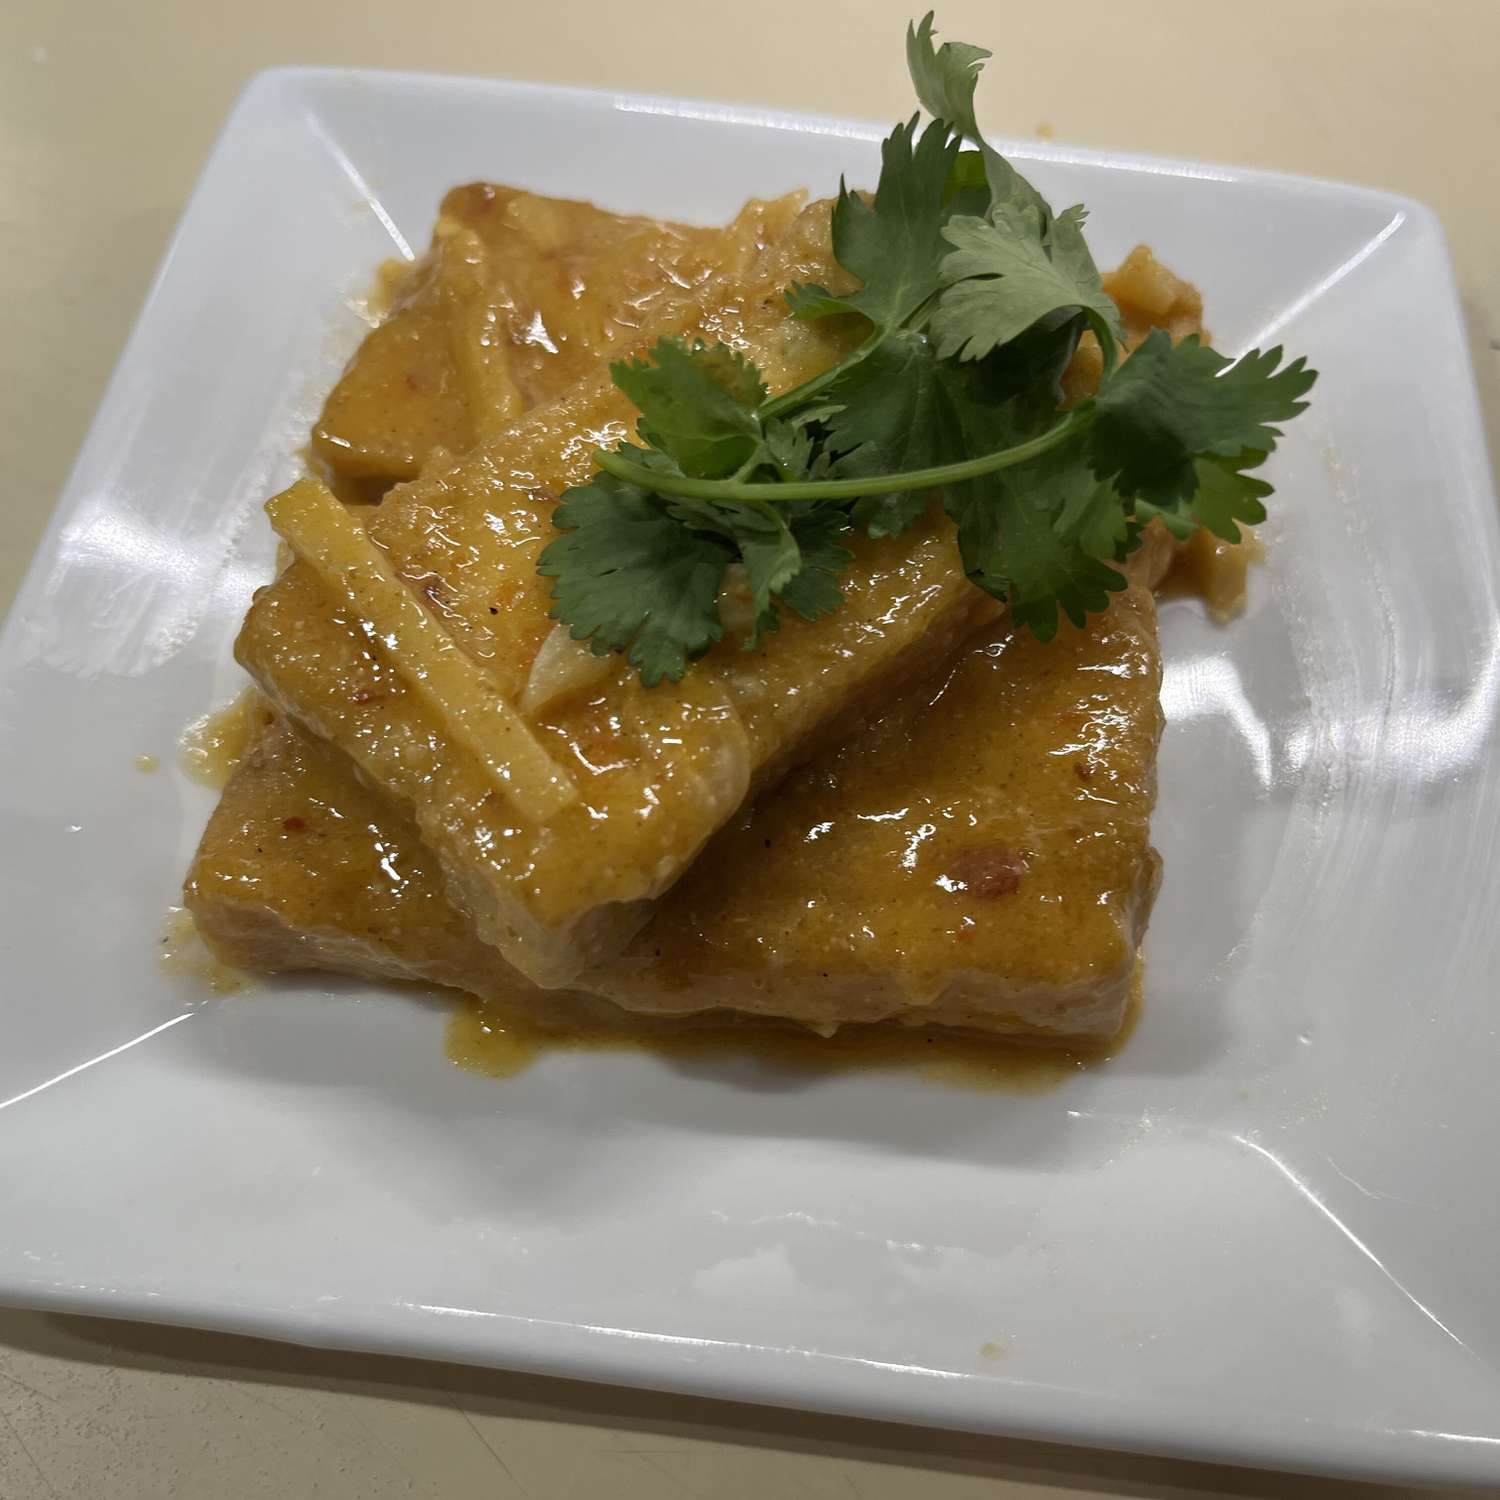 Three rectangles of glazed tofu topped with cilantro sprigs